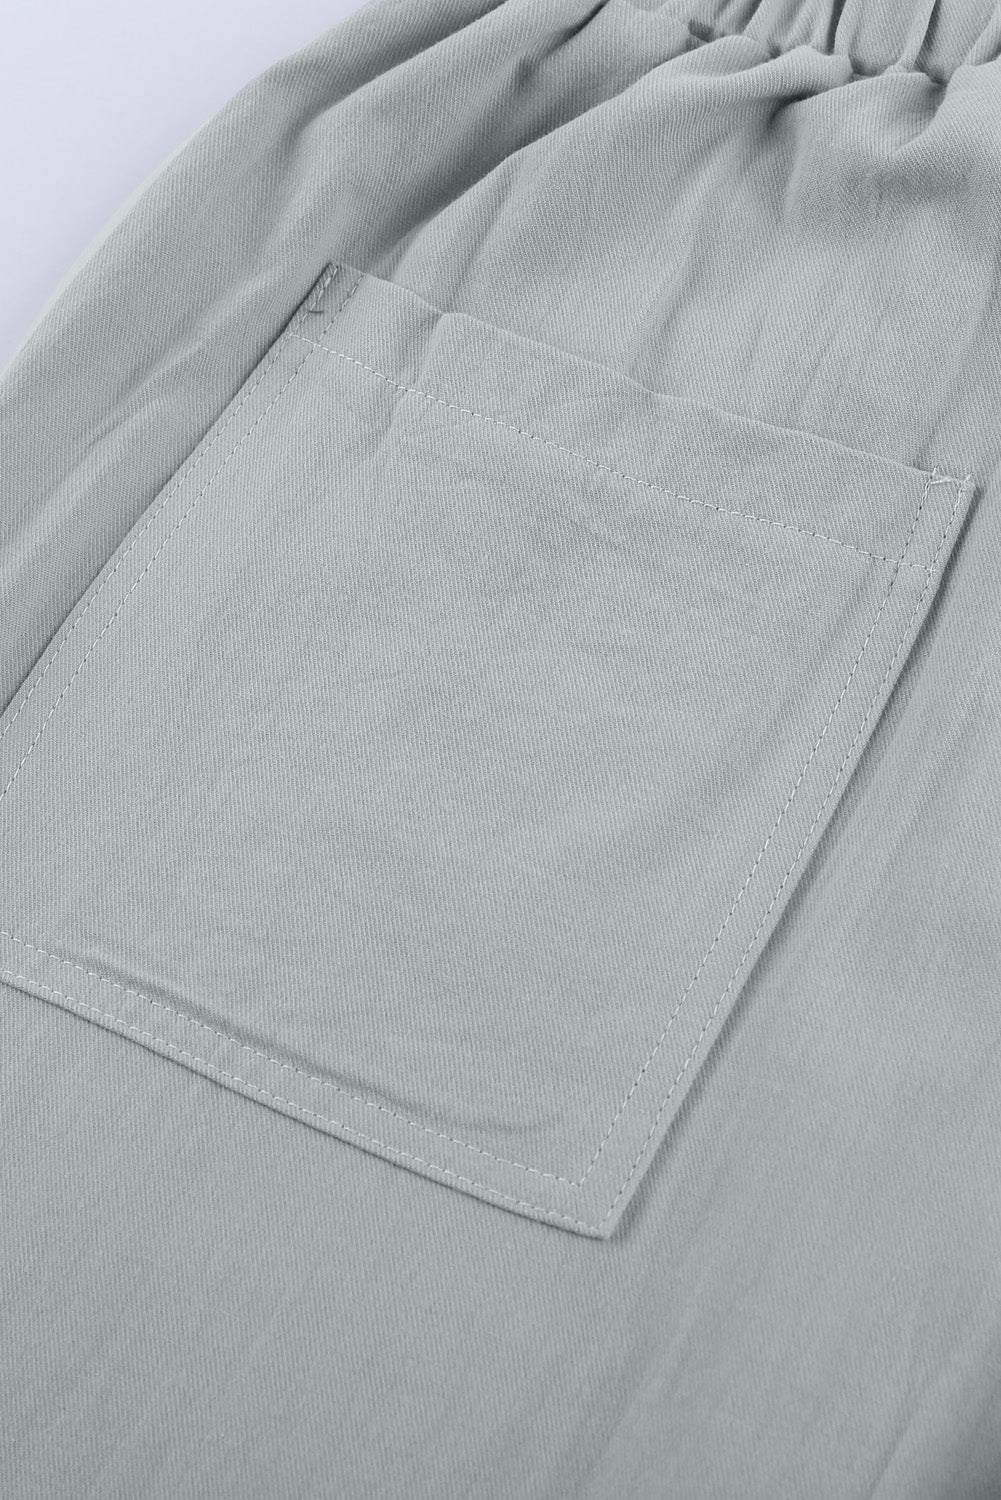 Women's Gray Casual Pockets Pants